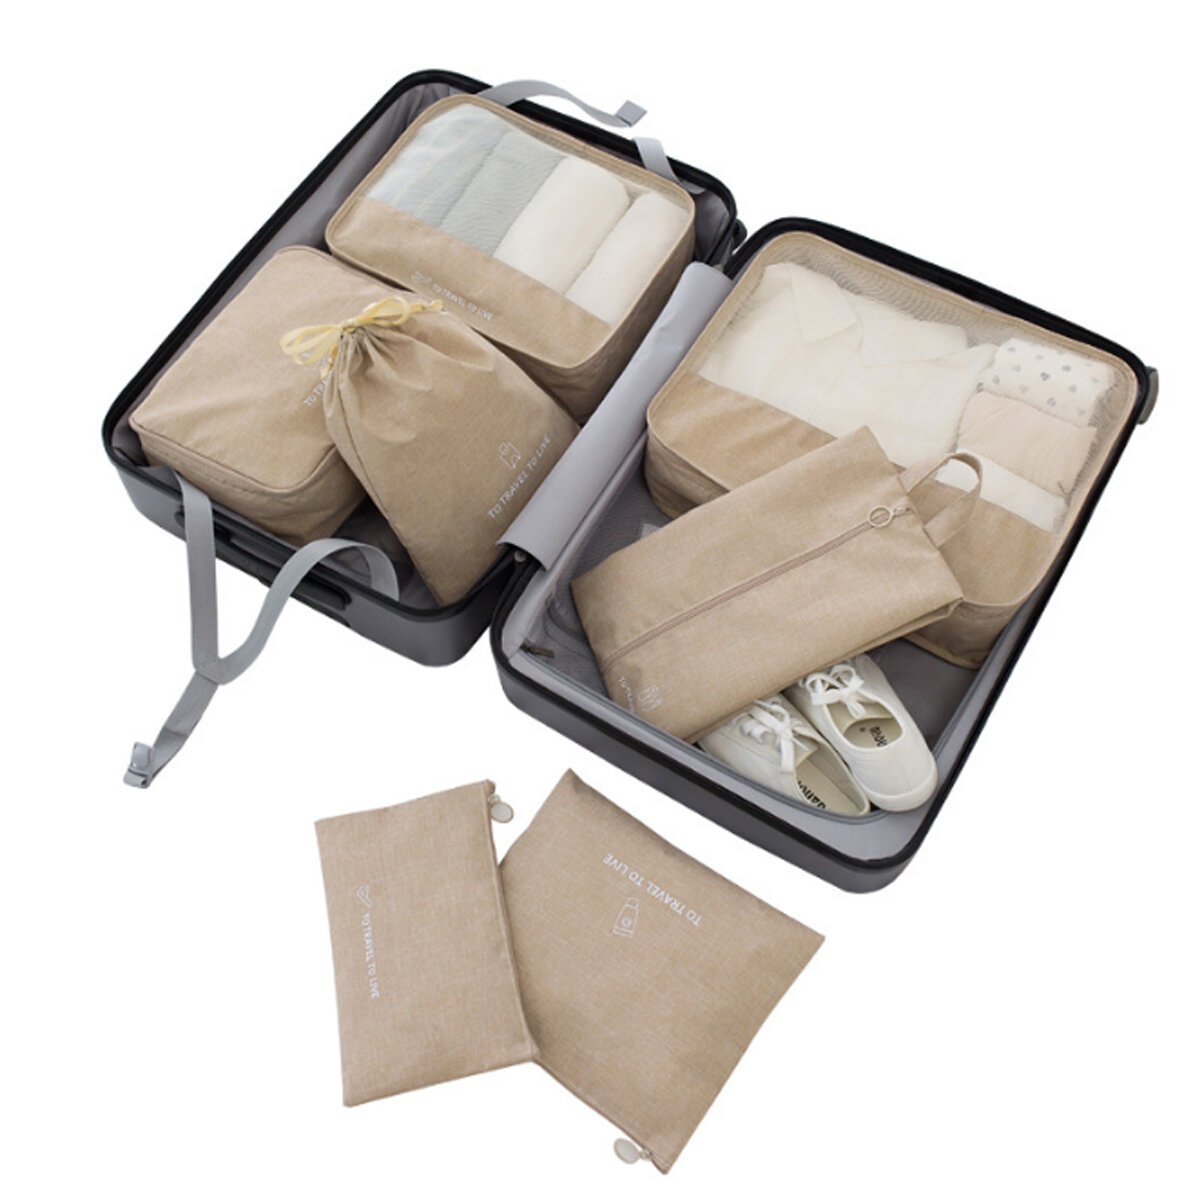 

7 Pcs Travel Storage Bag Clothes Luggage Packing Organizer Suitcase Camping Hiking